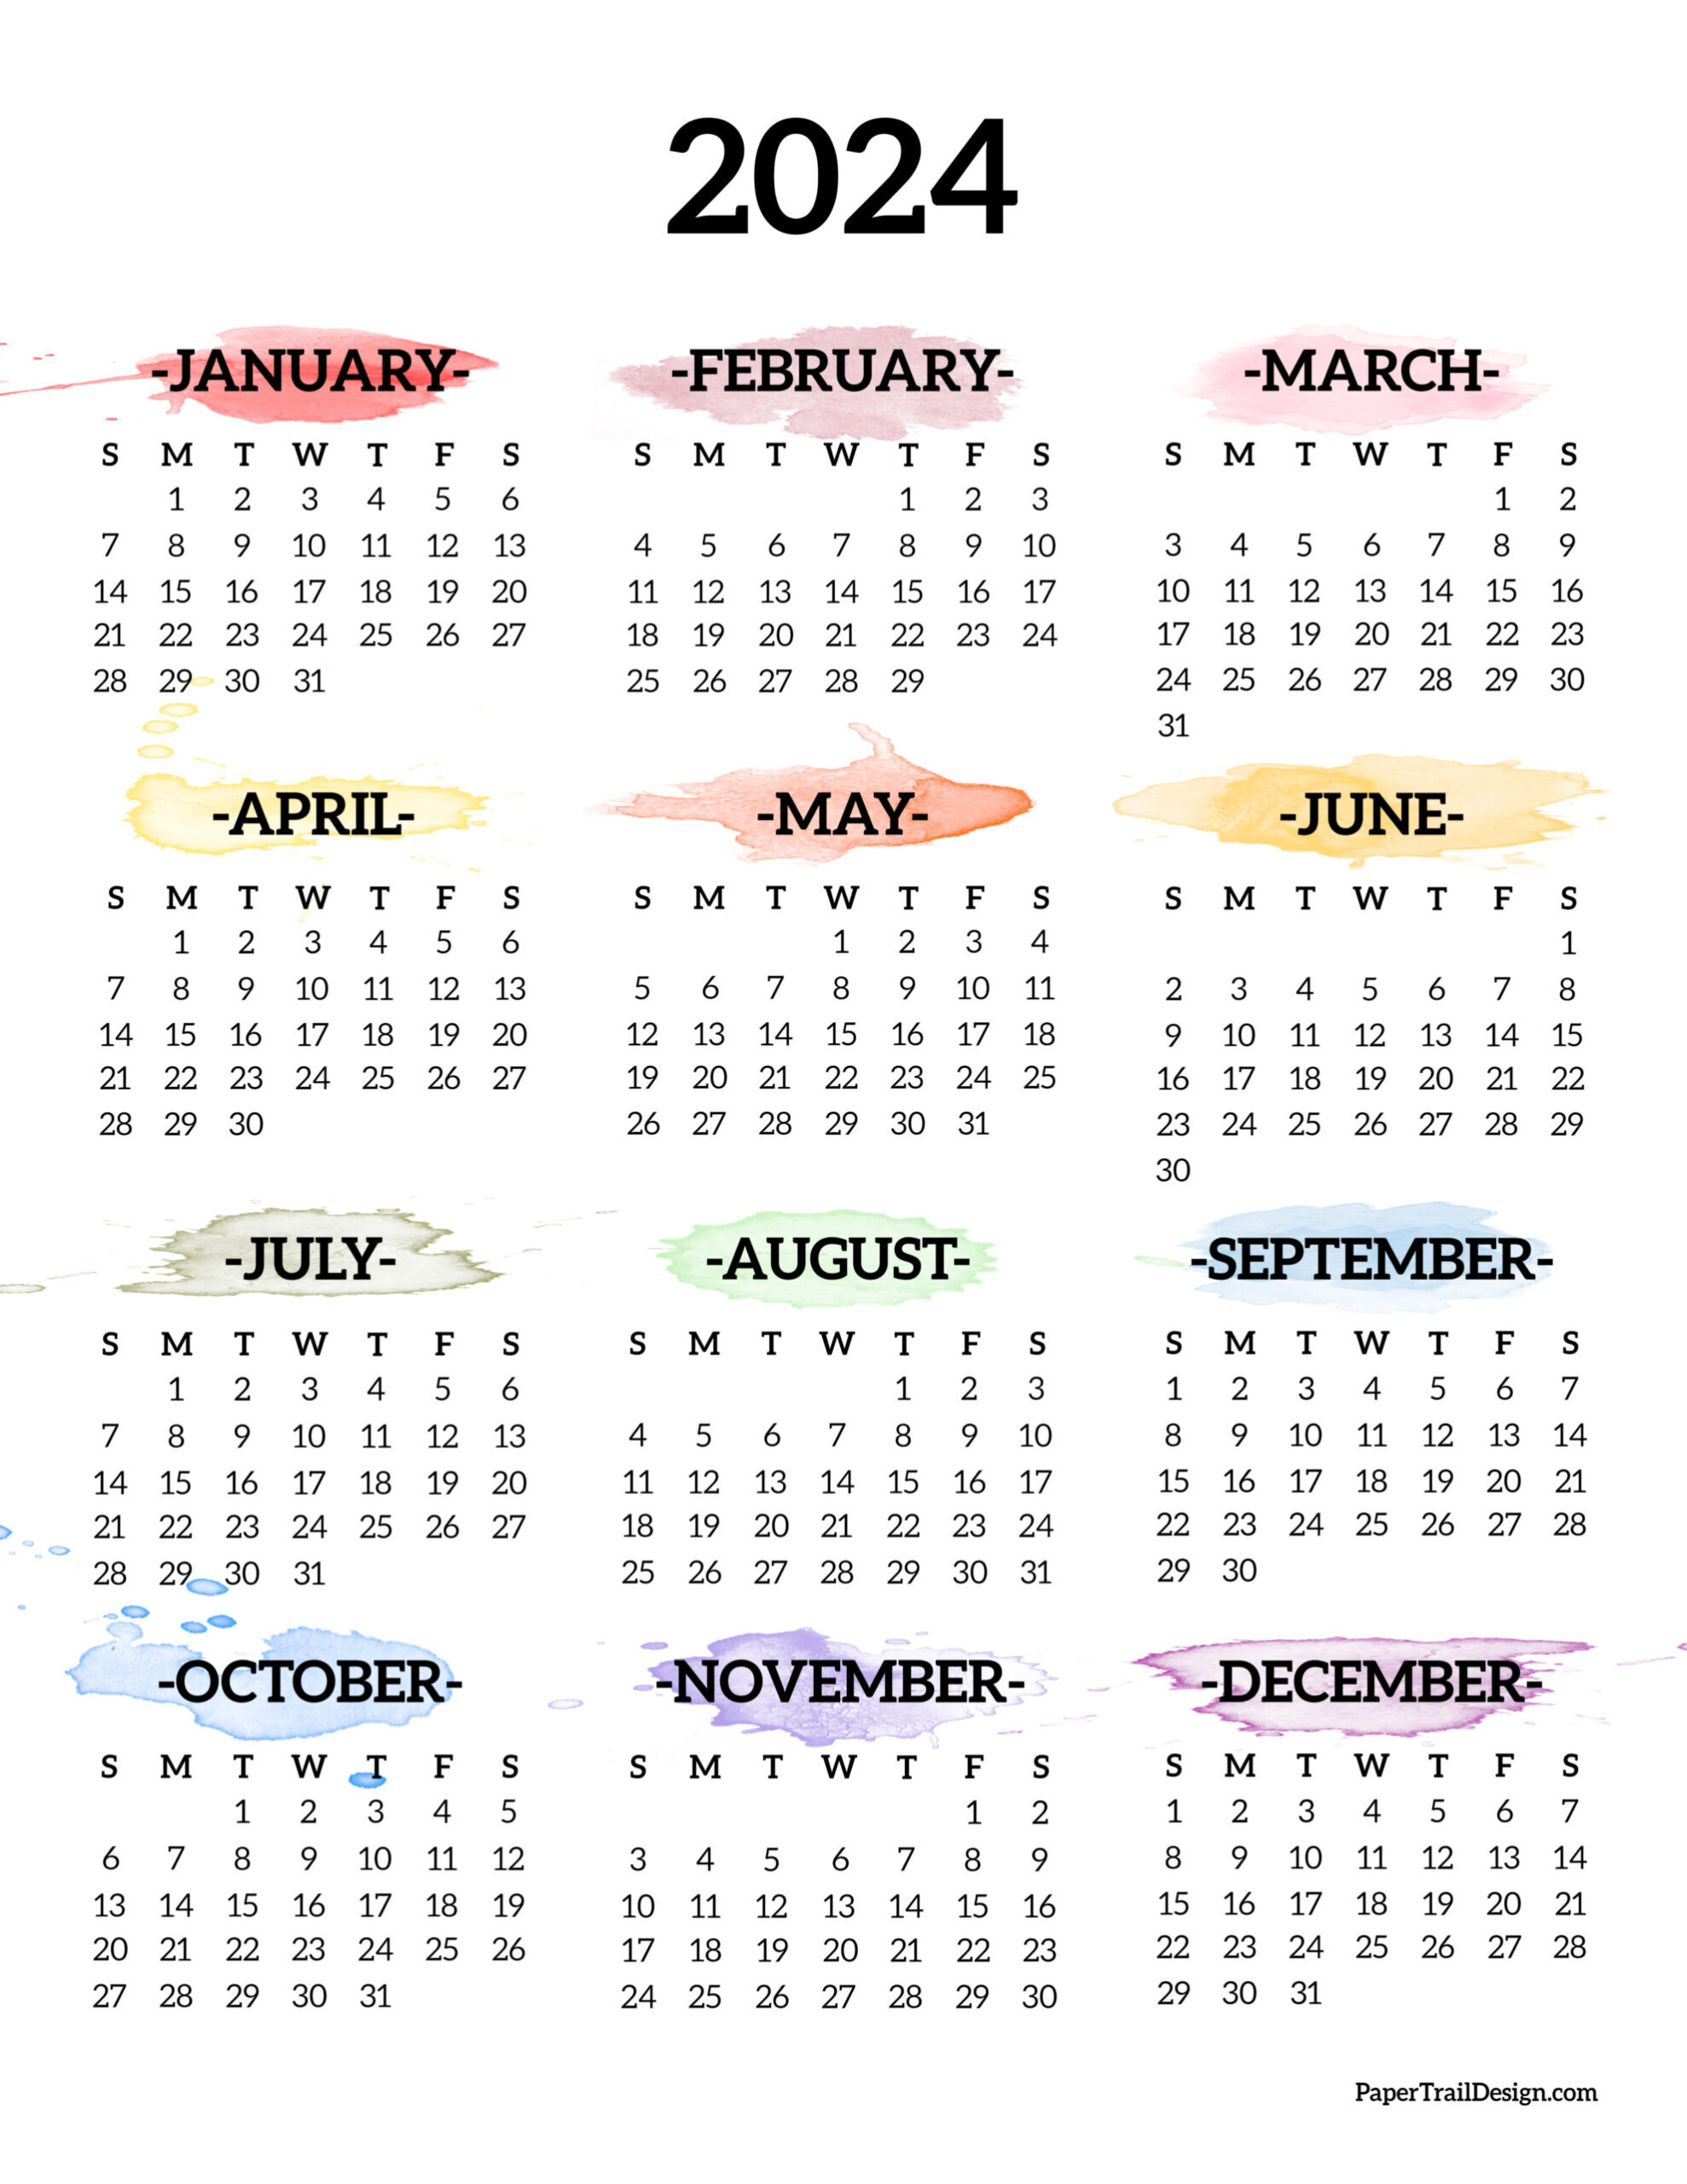 Calendar 2024 Printable One Page - Paper Trail Design | Printable Calendar 2024 Pages